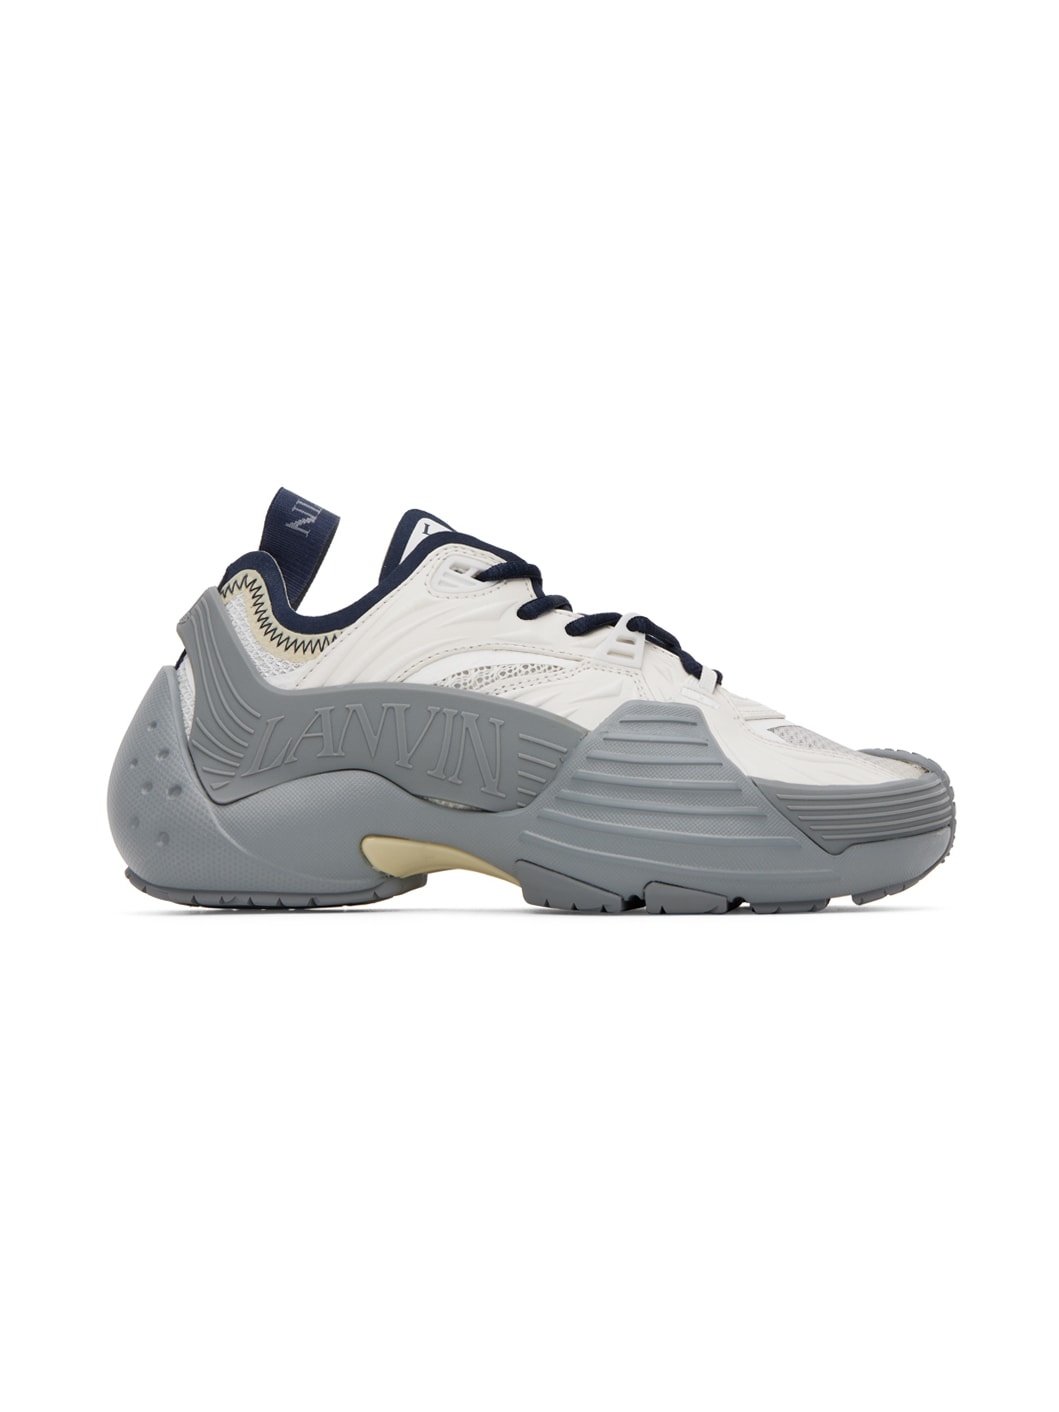 SSENSE Exclusive Gray & Navy Flash-X Sneakers - 1